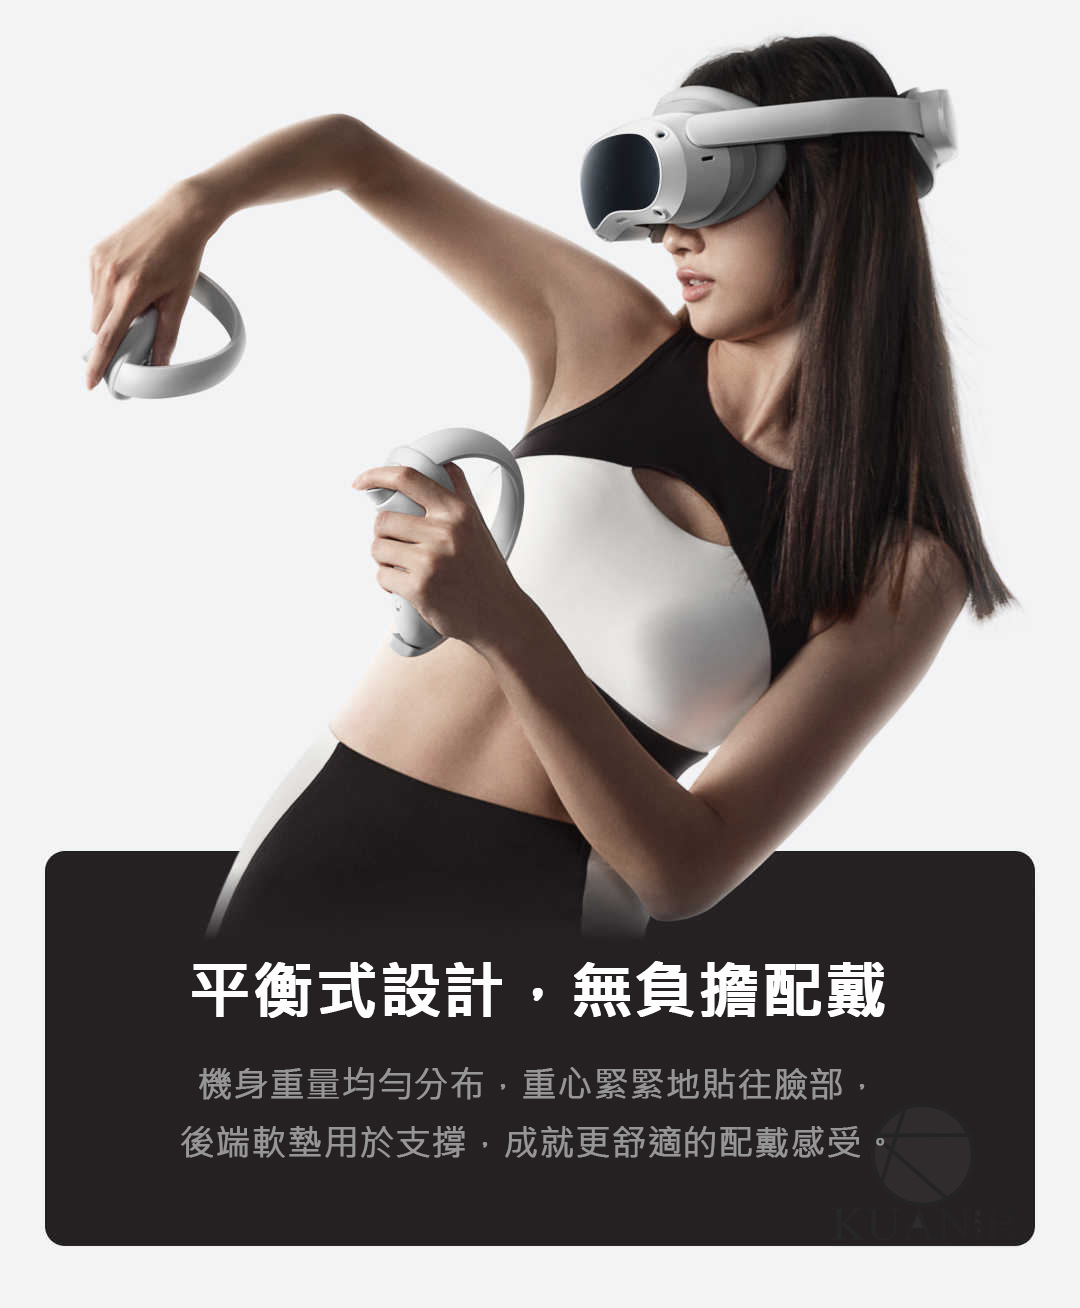 一年保固PICO 4 256G VR 一體機PICO4 VR眼鏡高清3D 無線串流電腦steam